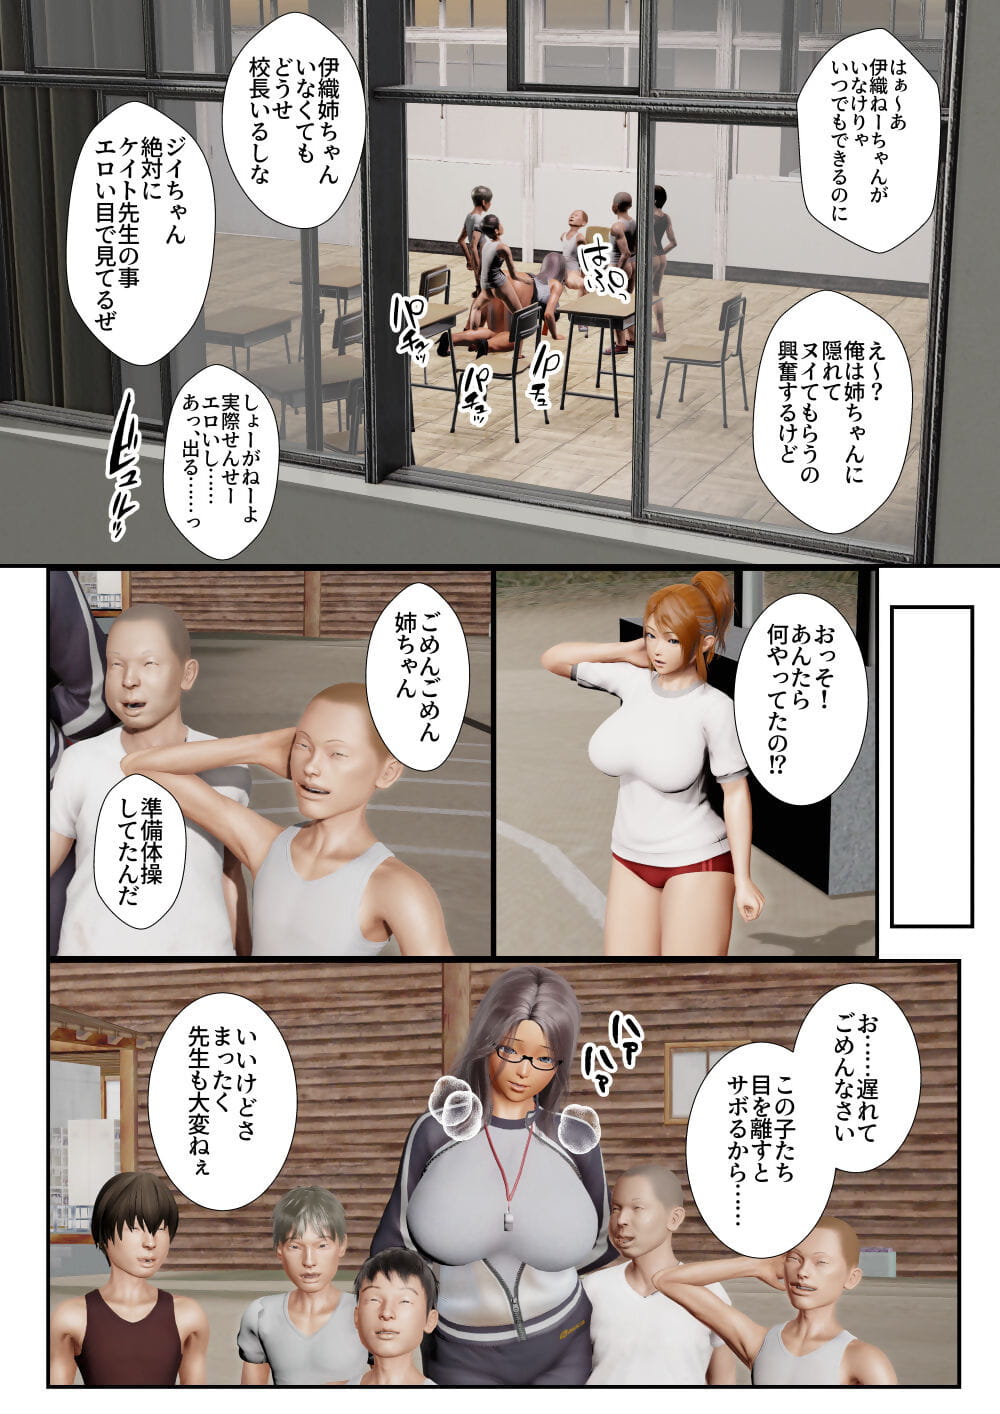 goriramu Touma kenshi shirizu Demon schermer serie Onderdeel 4 page 1